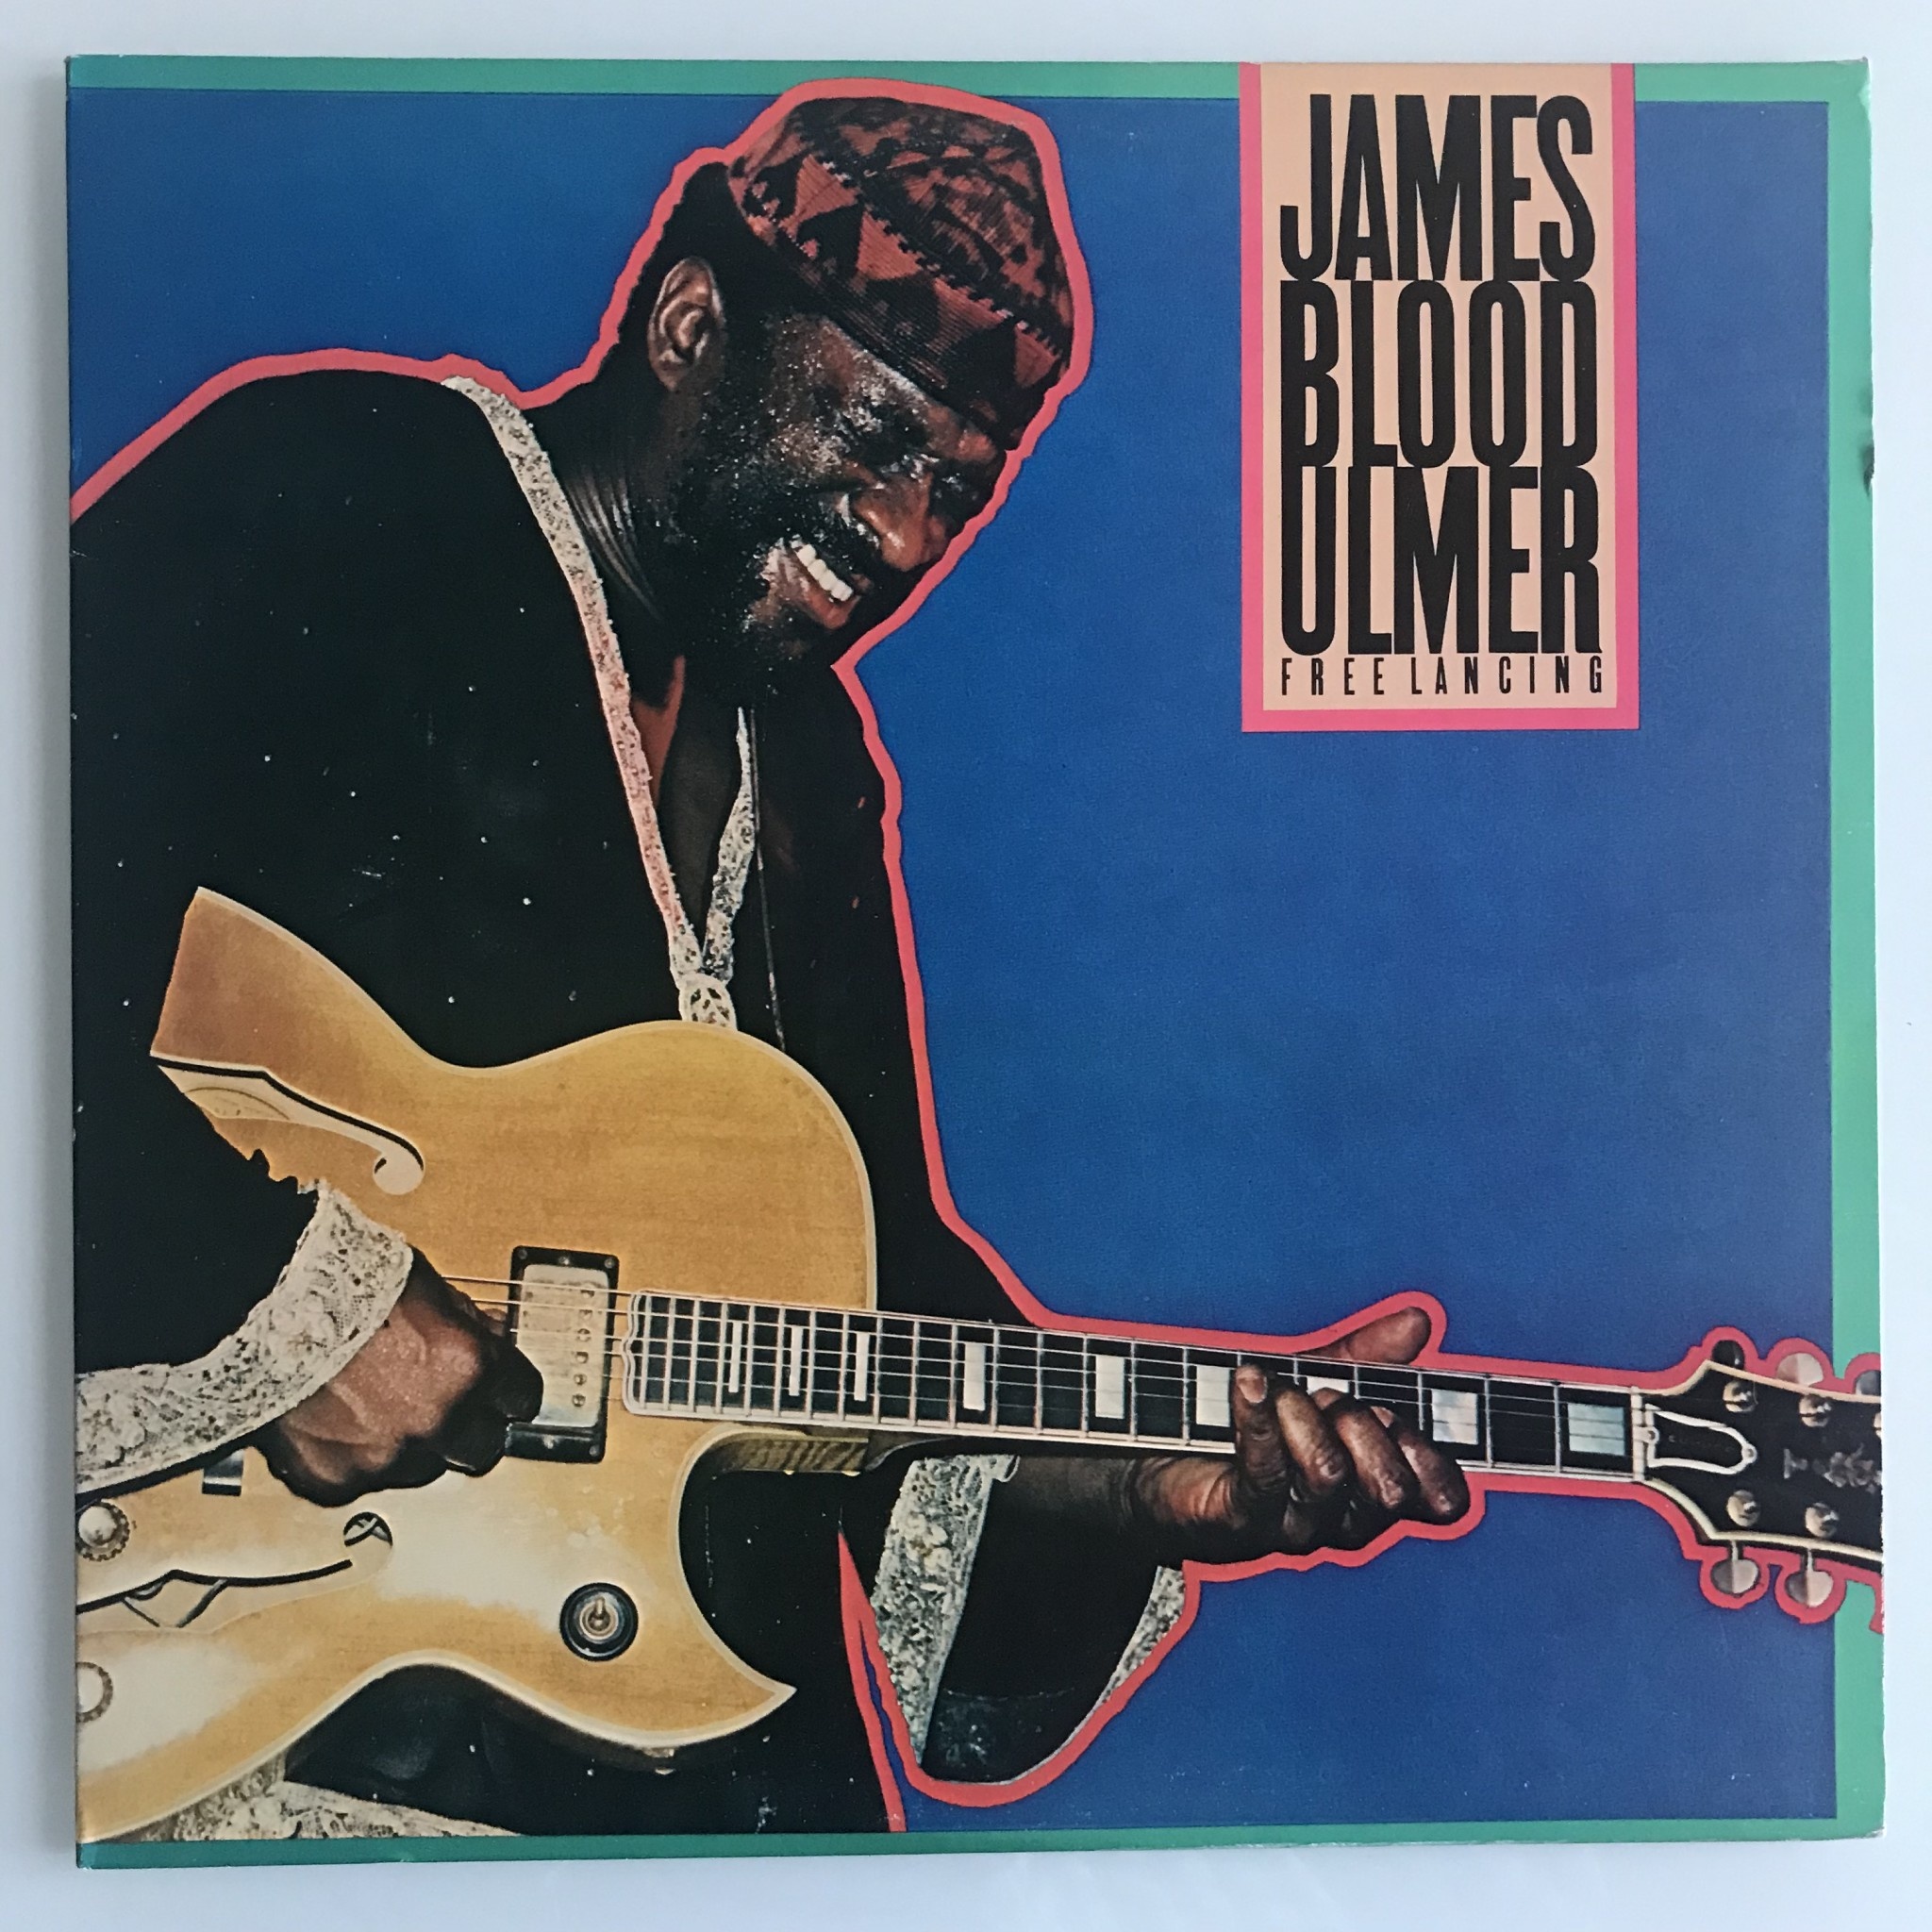 James Blood Ulmer - Freelancing - Vinyl LP (USED) - MOJOMALA LLC